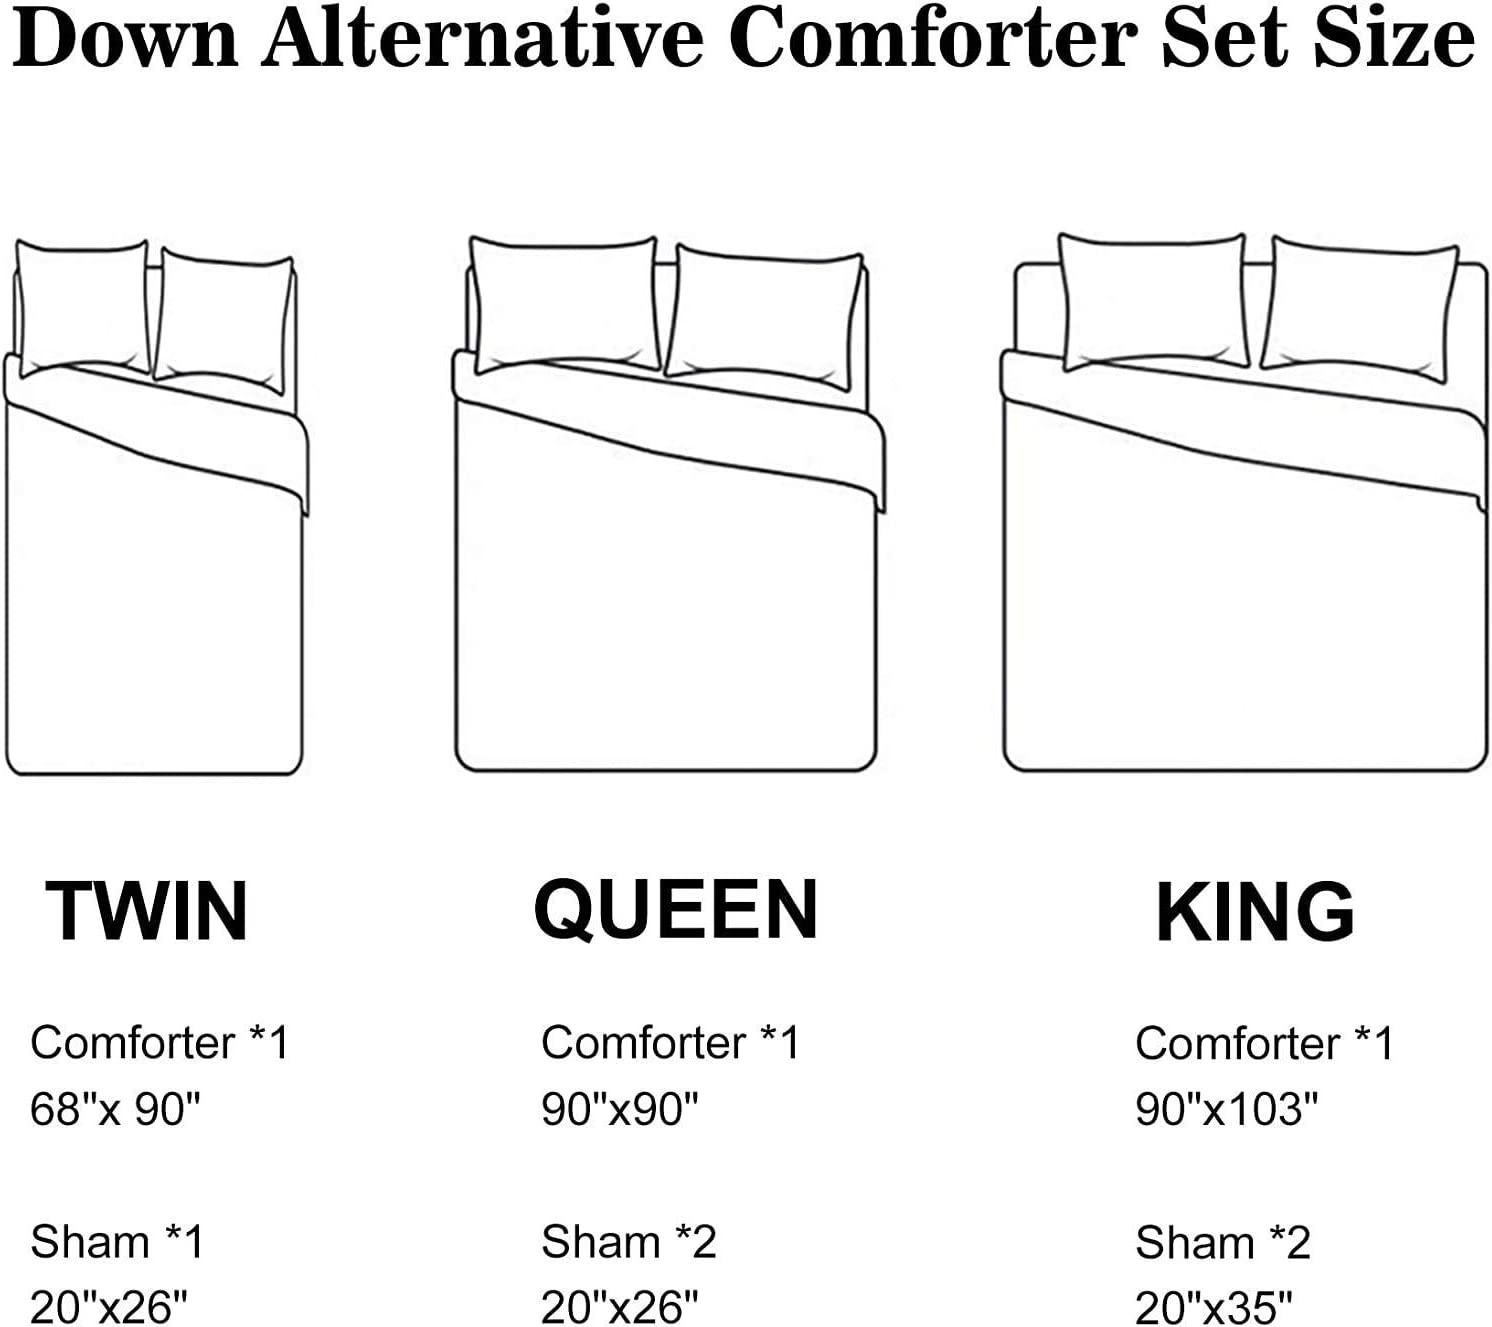 Shatex Comforter Set 3 Piece Comforter Bedding Set- All Season Bedding Comforter Set, Ultra Soft Polyester Elegant Boho Bedding Comforters